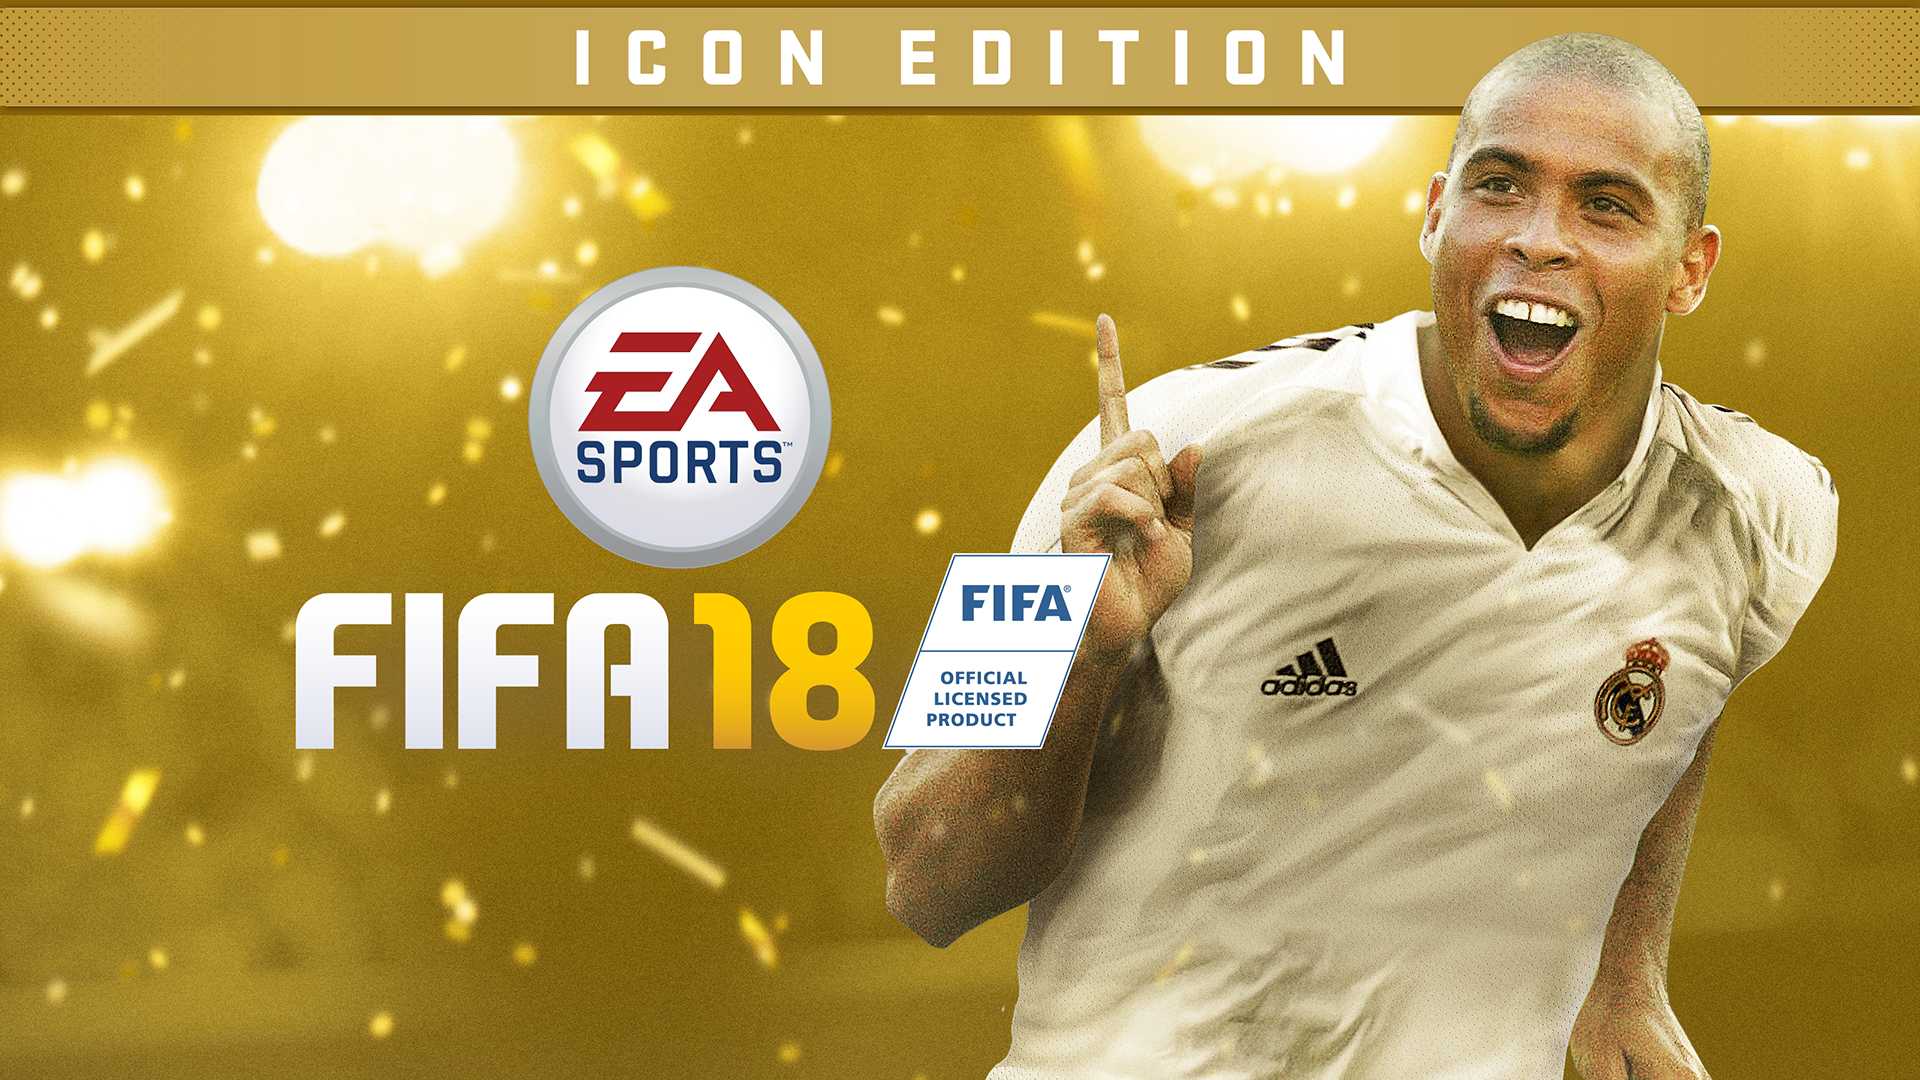 Обложка fifa. ФИФА 18. FIFA 18 обложка. FIFA 18 (ФИФА 18). ФИФА 2018 обложка.